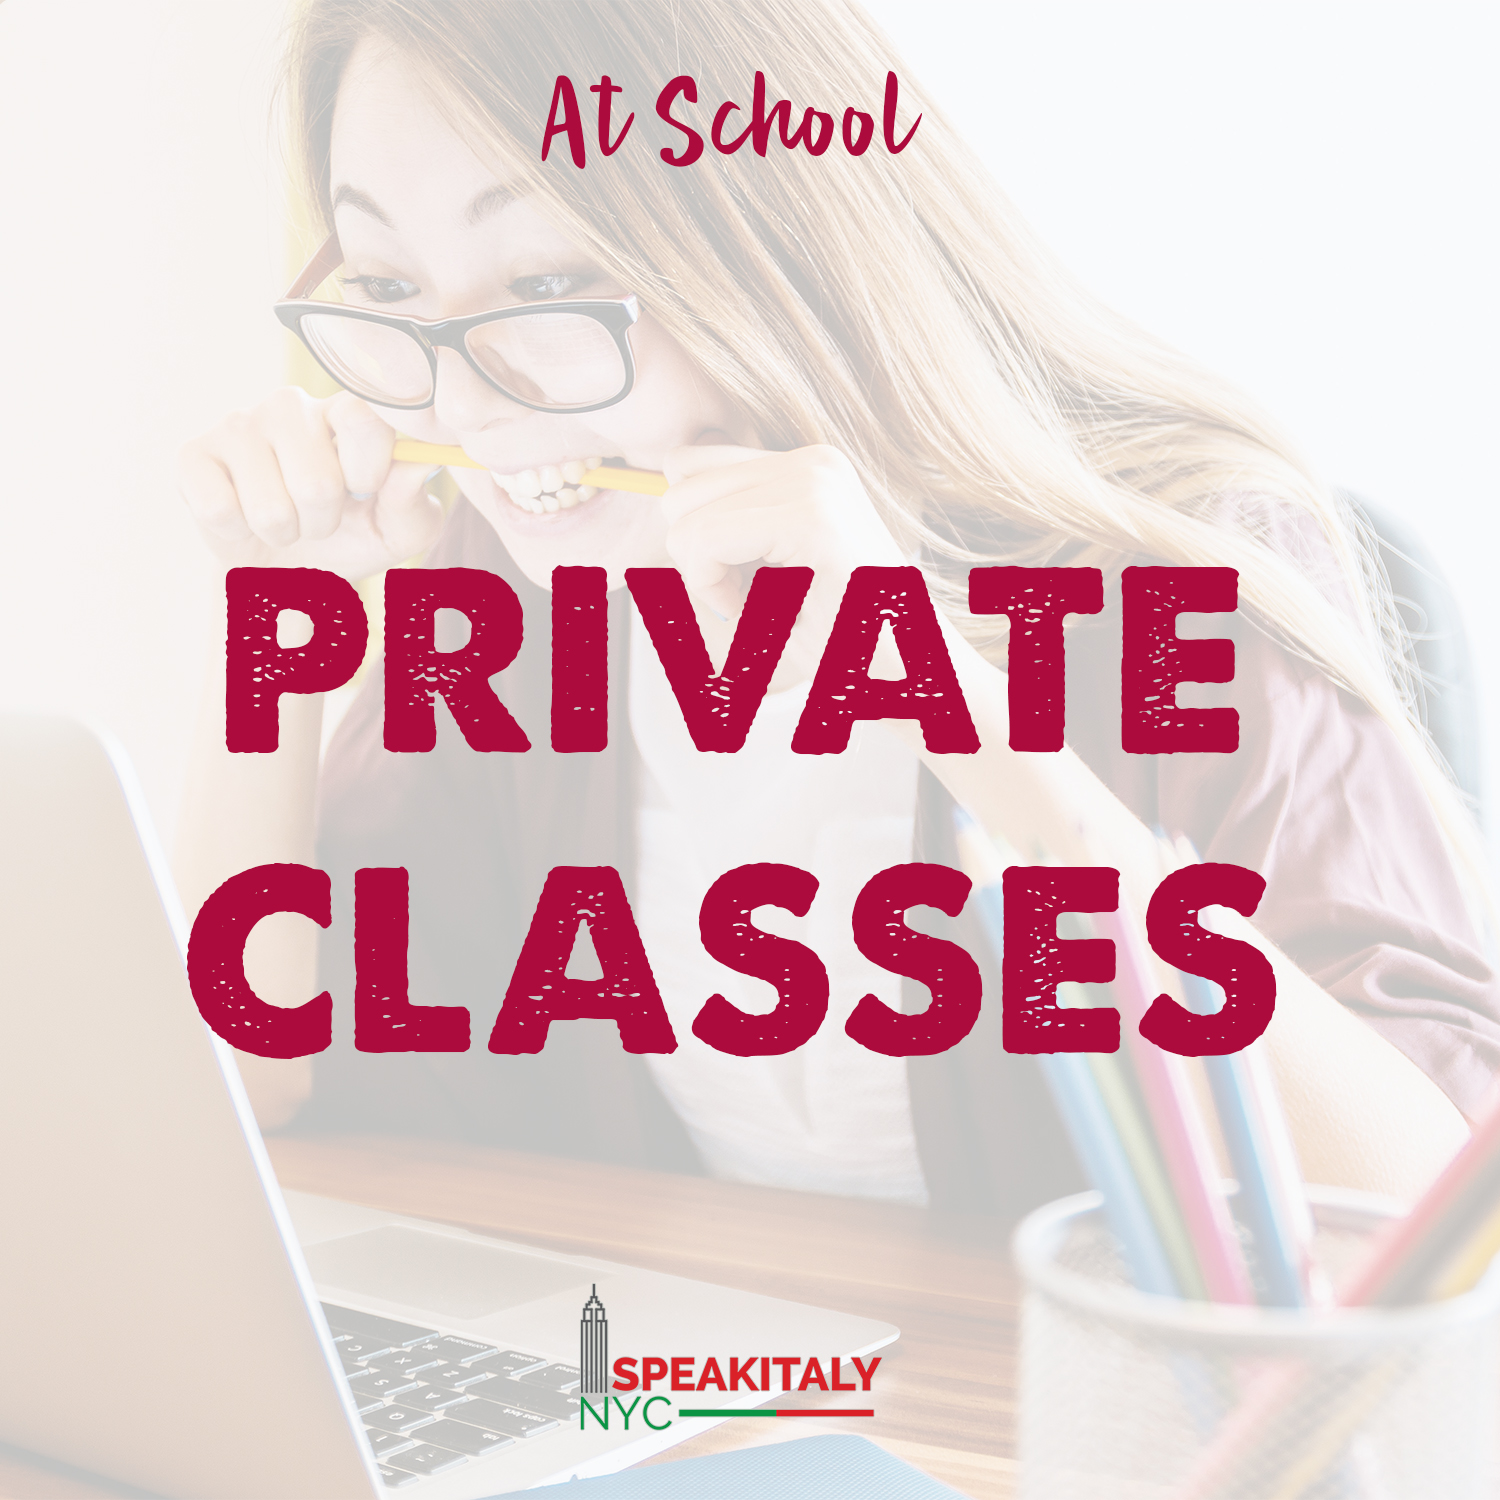 Private Classes - At School